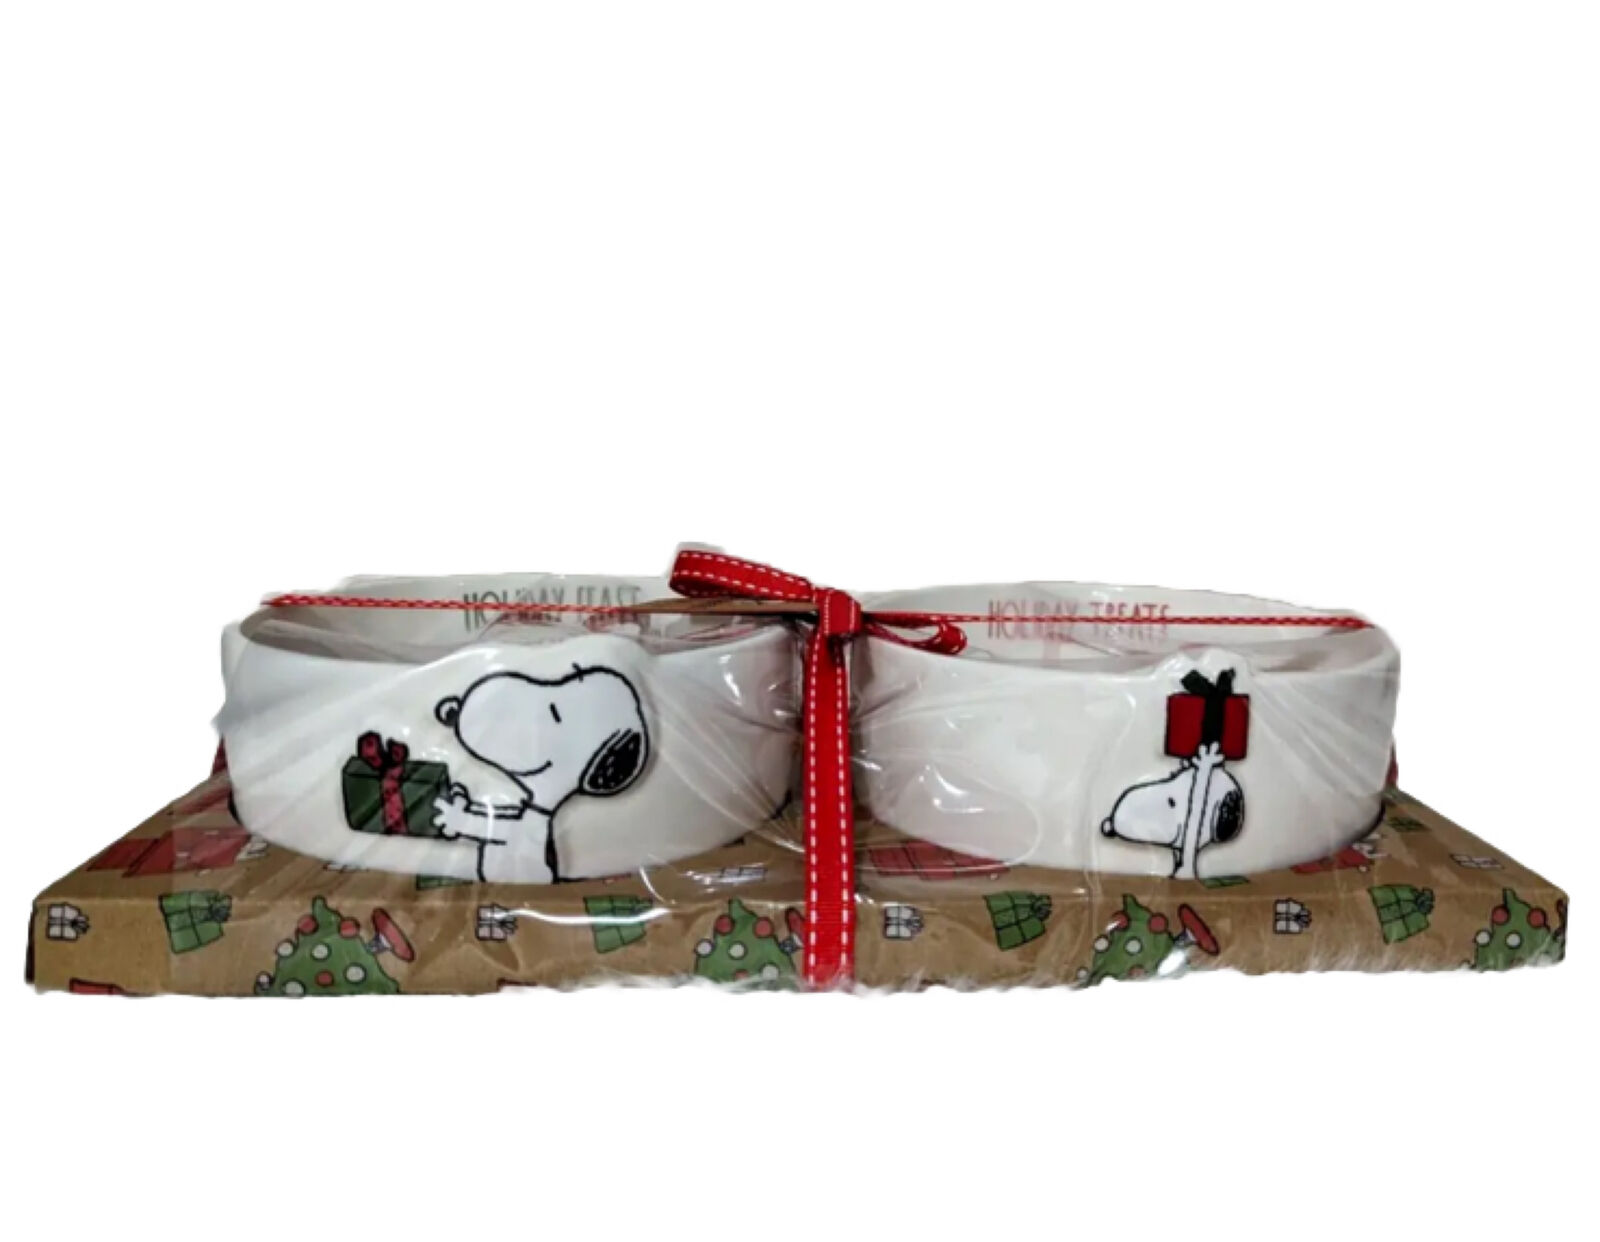 Peanuts x Rae Dunn Holiday Bowls Feast Treats Ceramic Bowls Set of 2 NEW